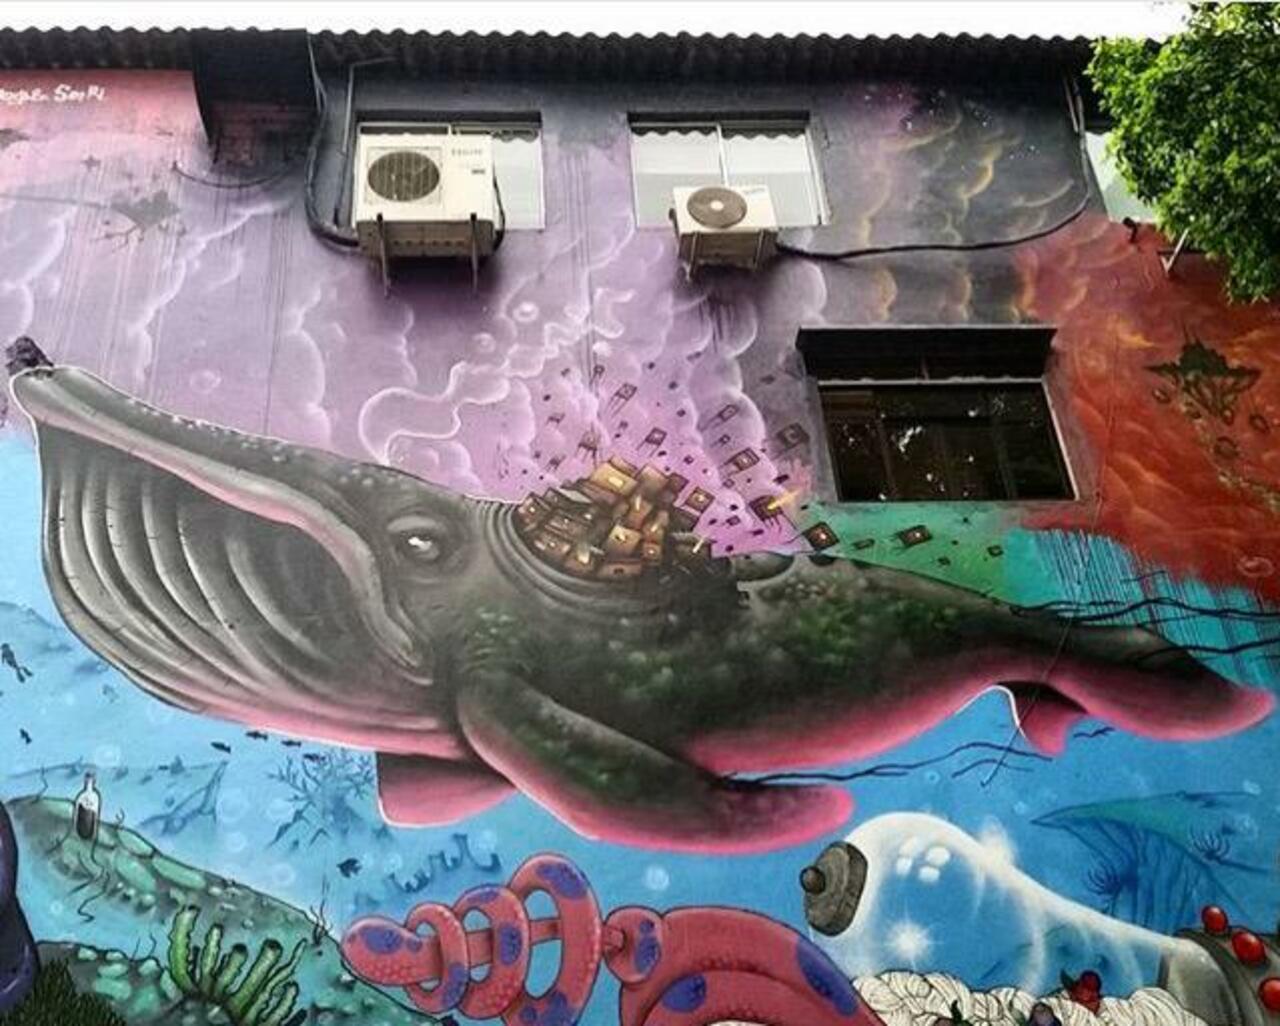 Street Art by joks_johnes Pinheiros, São Paulo 

#art #mural #graffiti #streetart http://t.co/rF50qDBemY